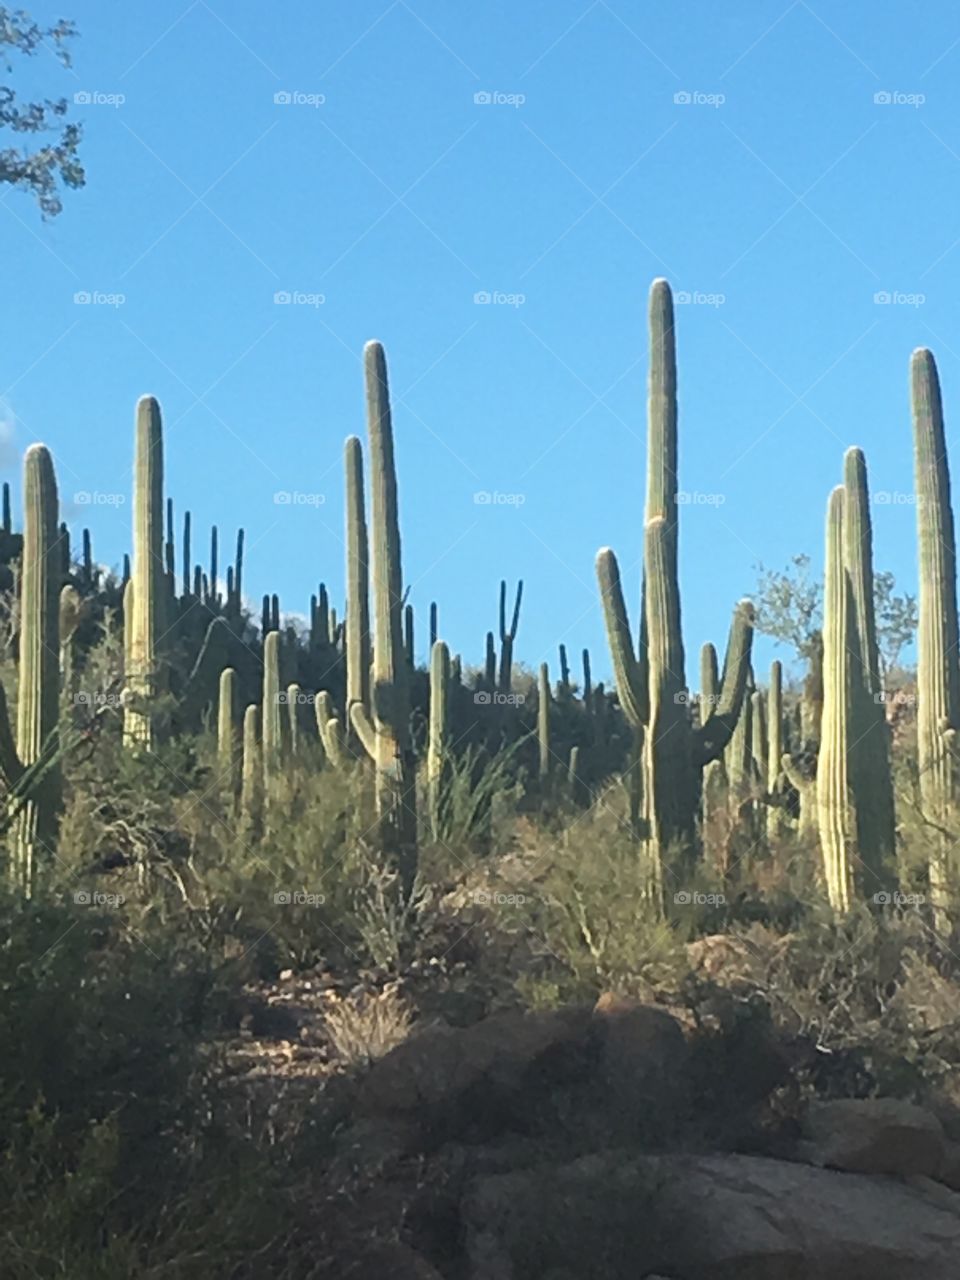 Saguaro National Park, Tucson AZ hiking trail